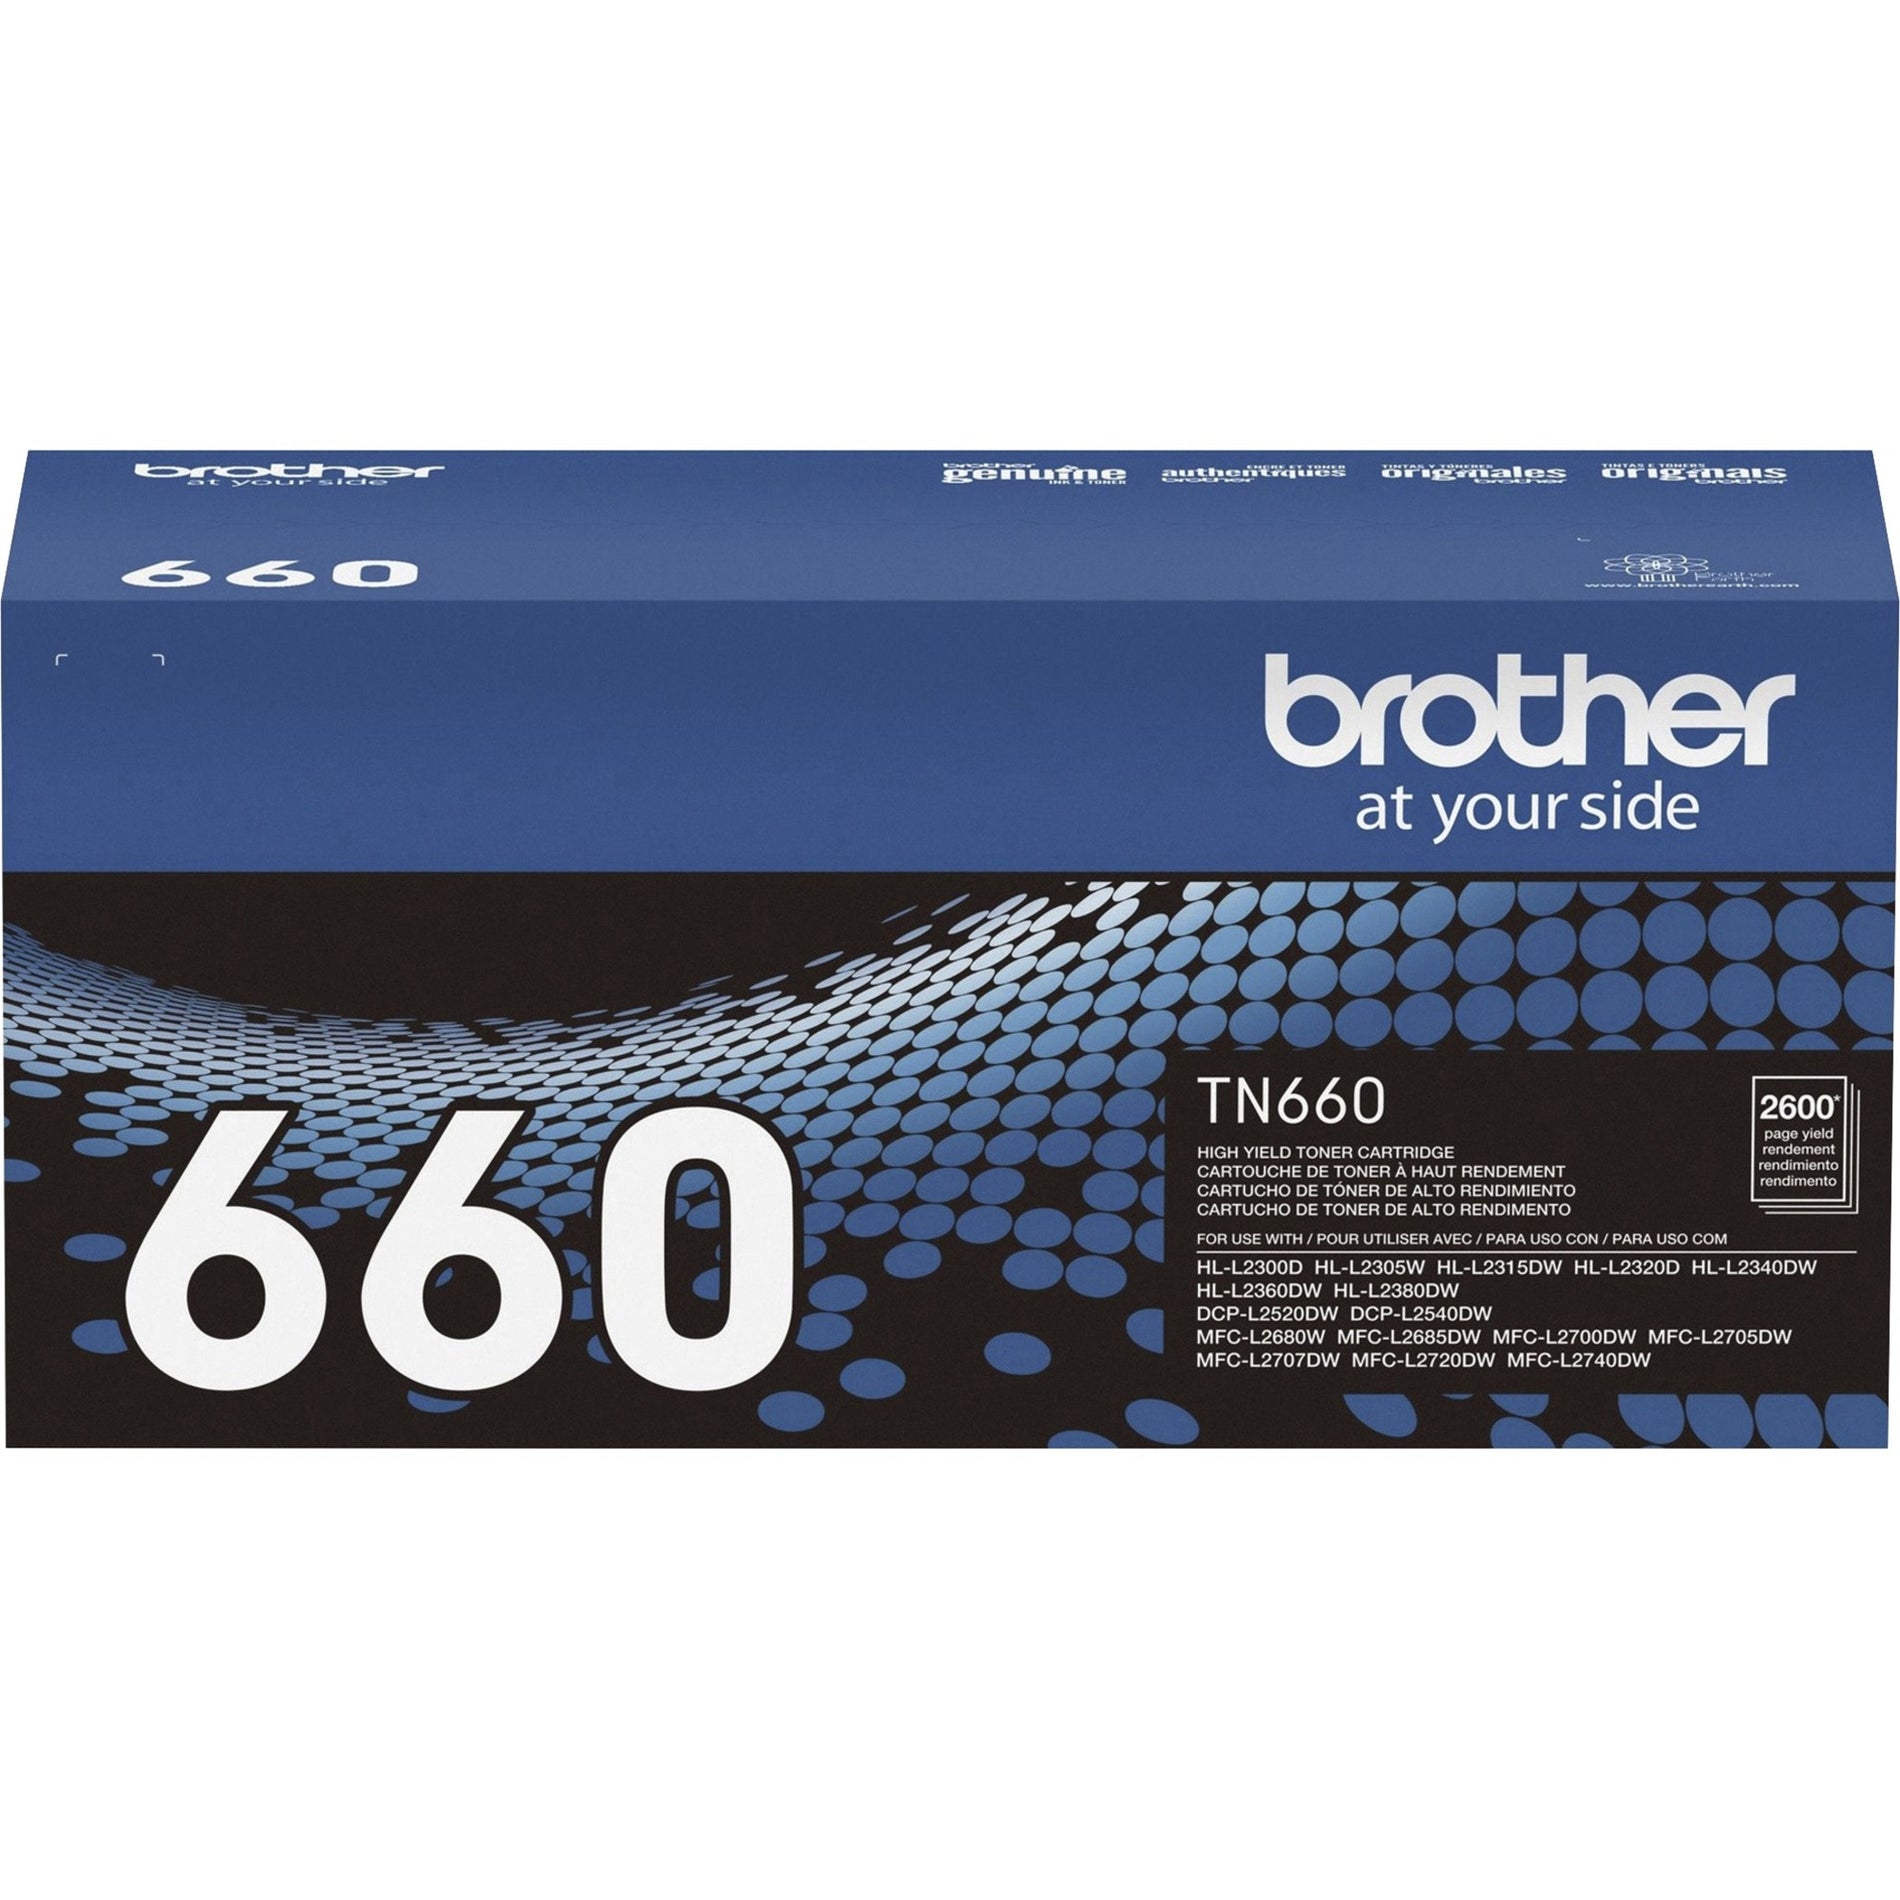 Brother TN660 High-yield Toner Cartridge, 2600 Page Yield, Black